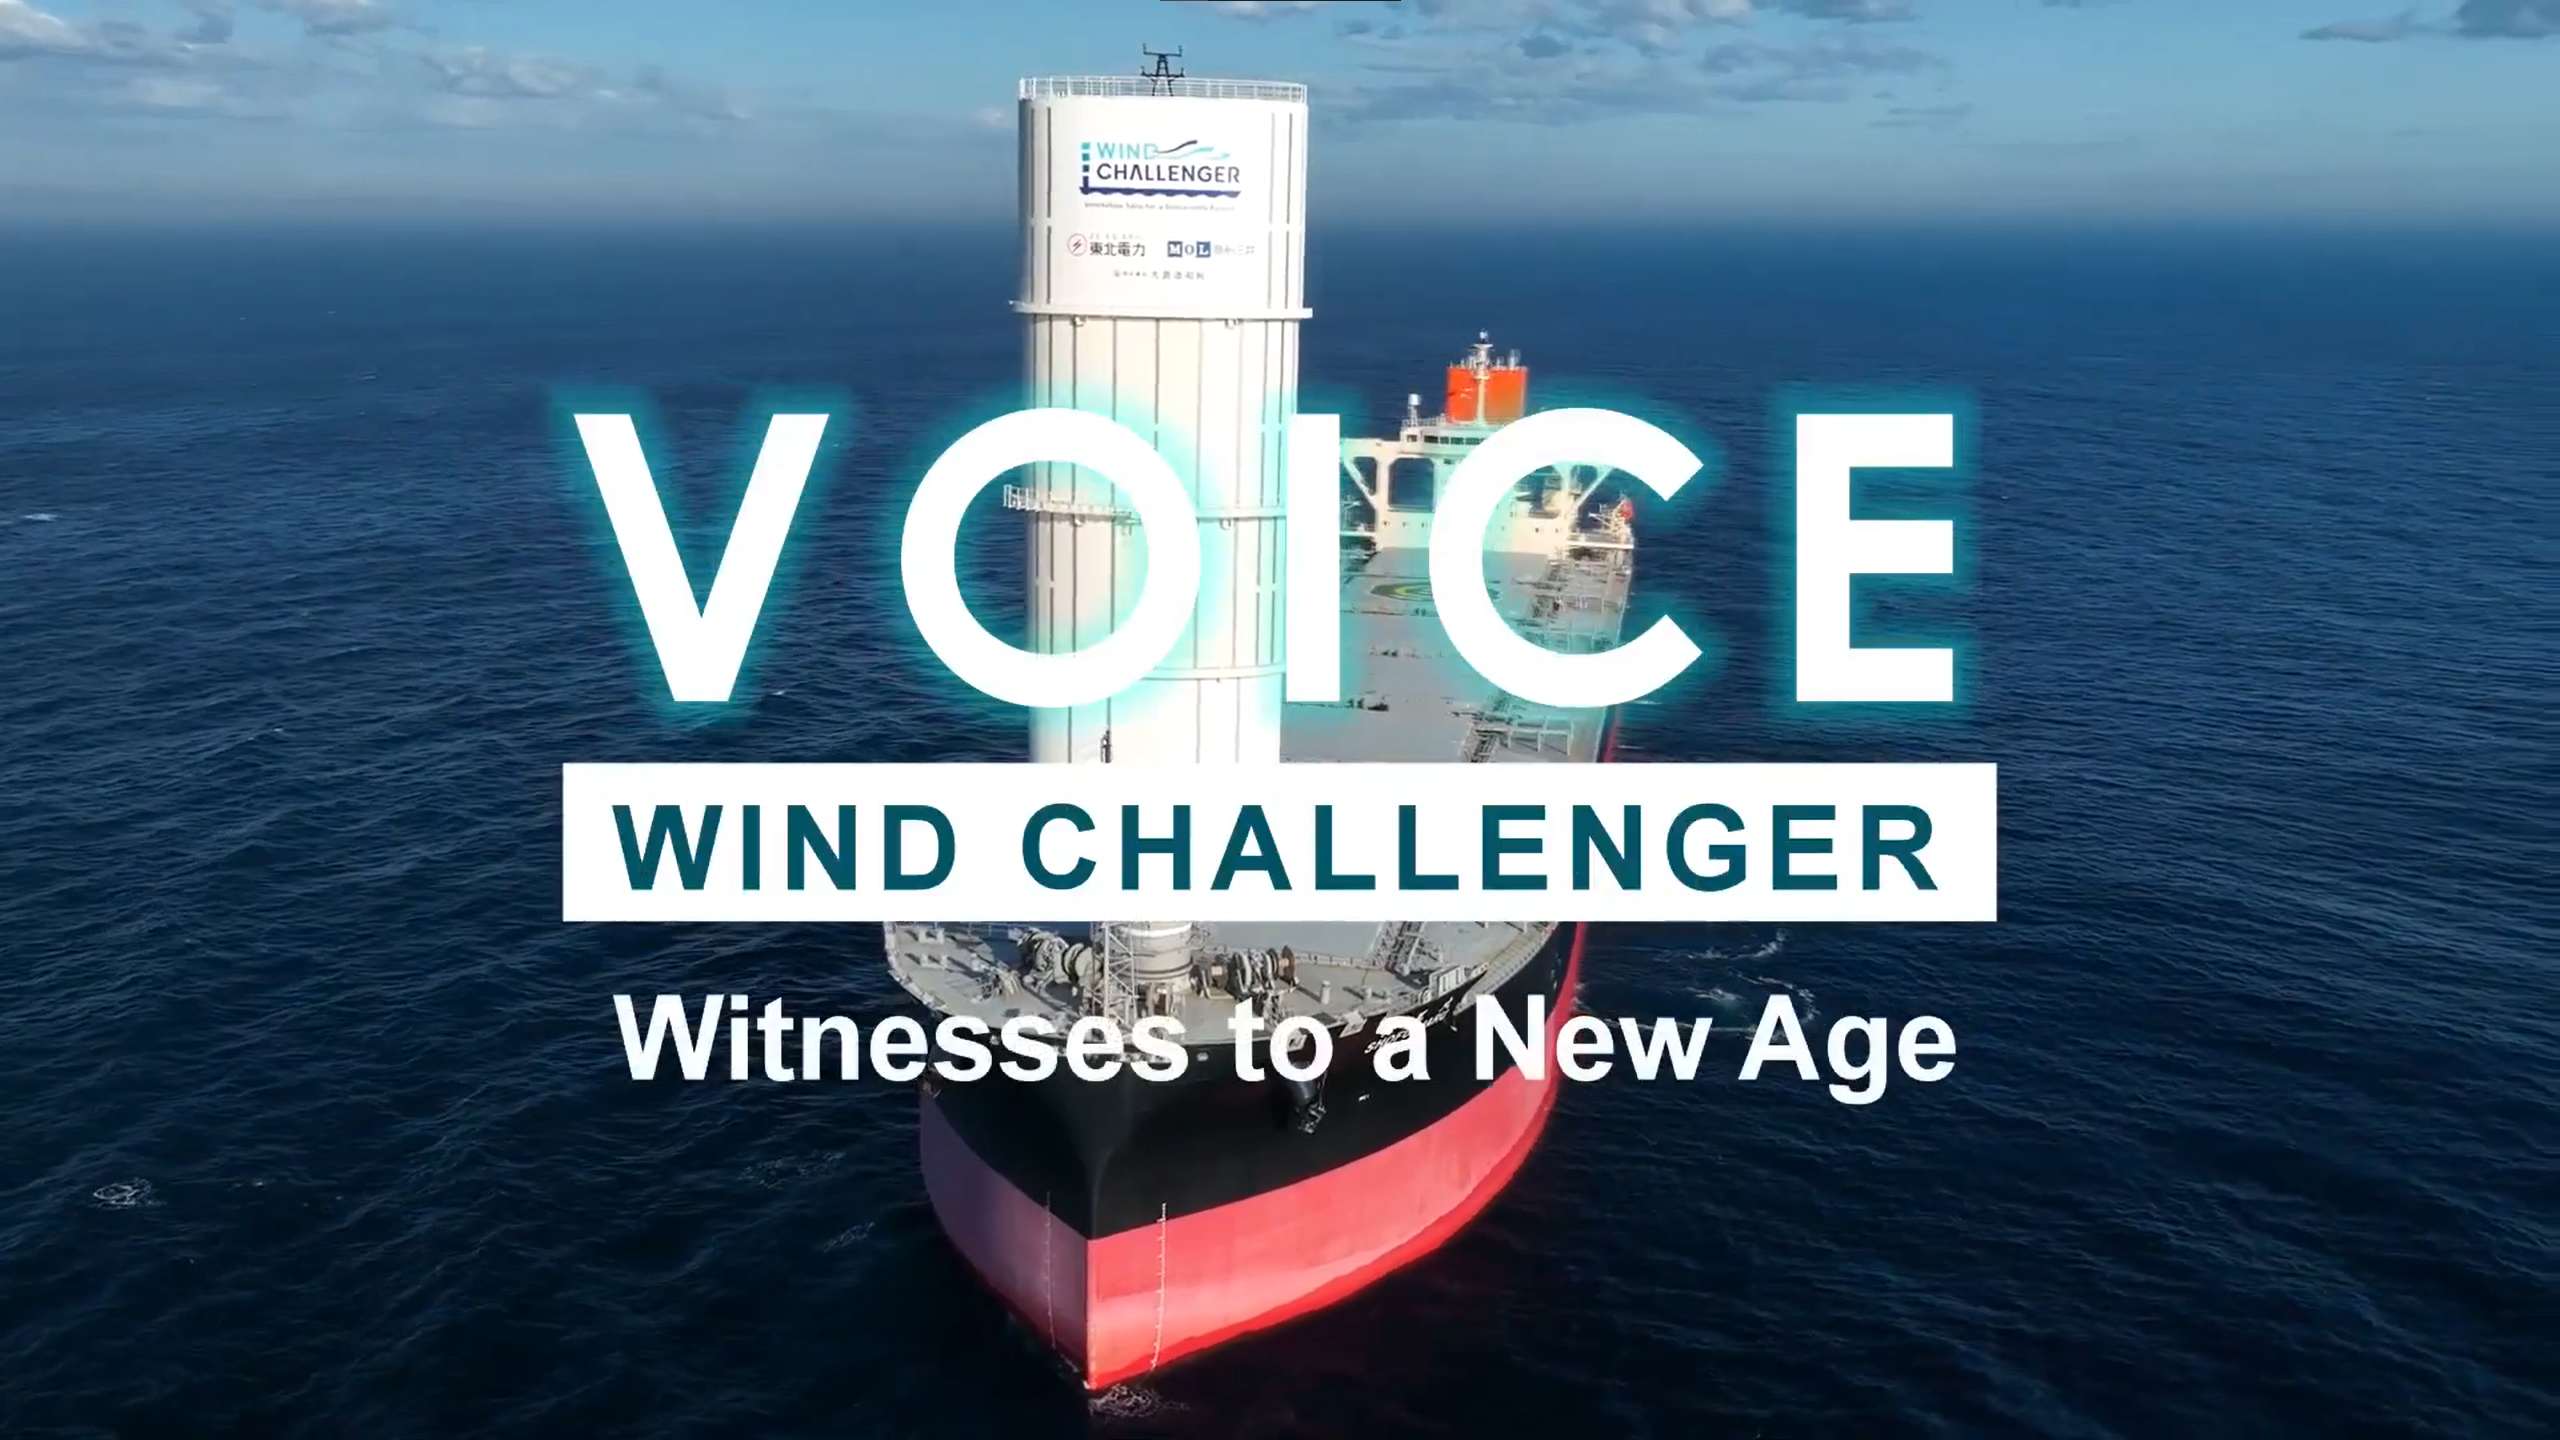 The 1st Wind Challenger vessel, “SHOFU MARU” completed her maiden voyage